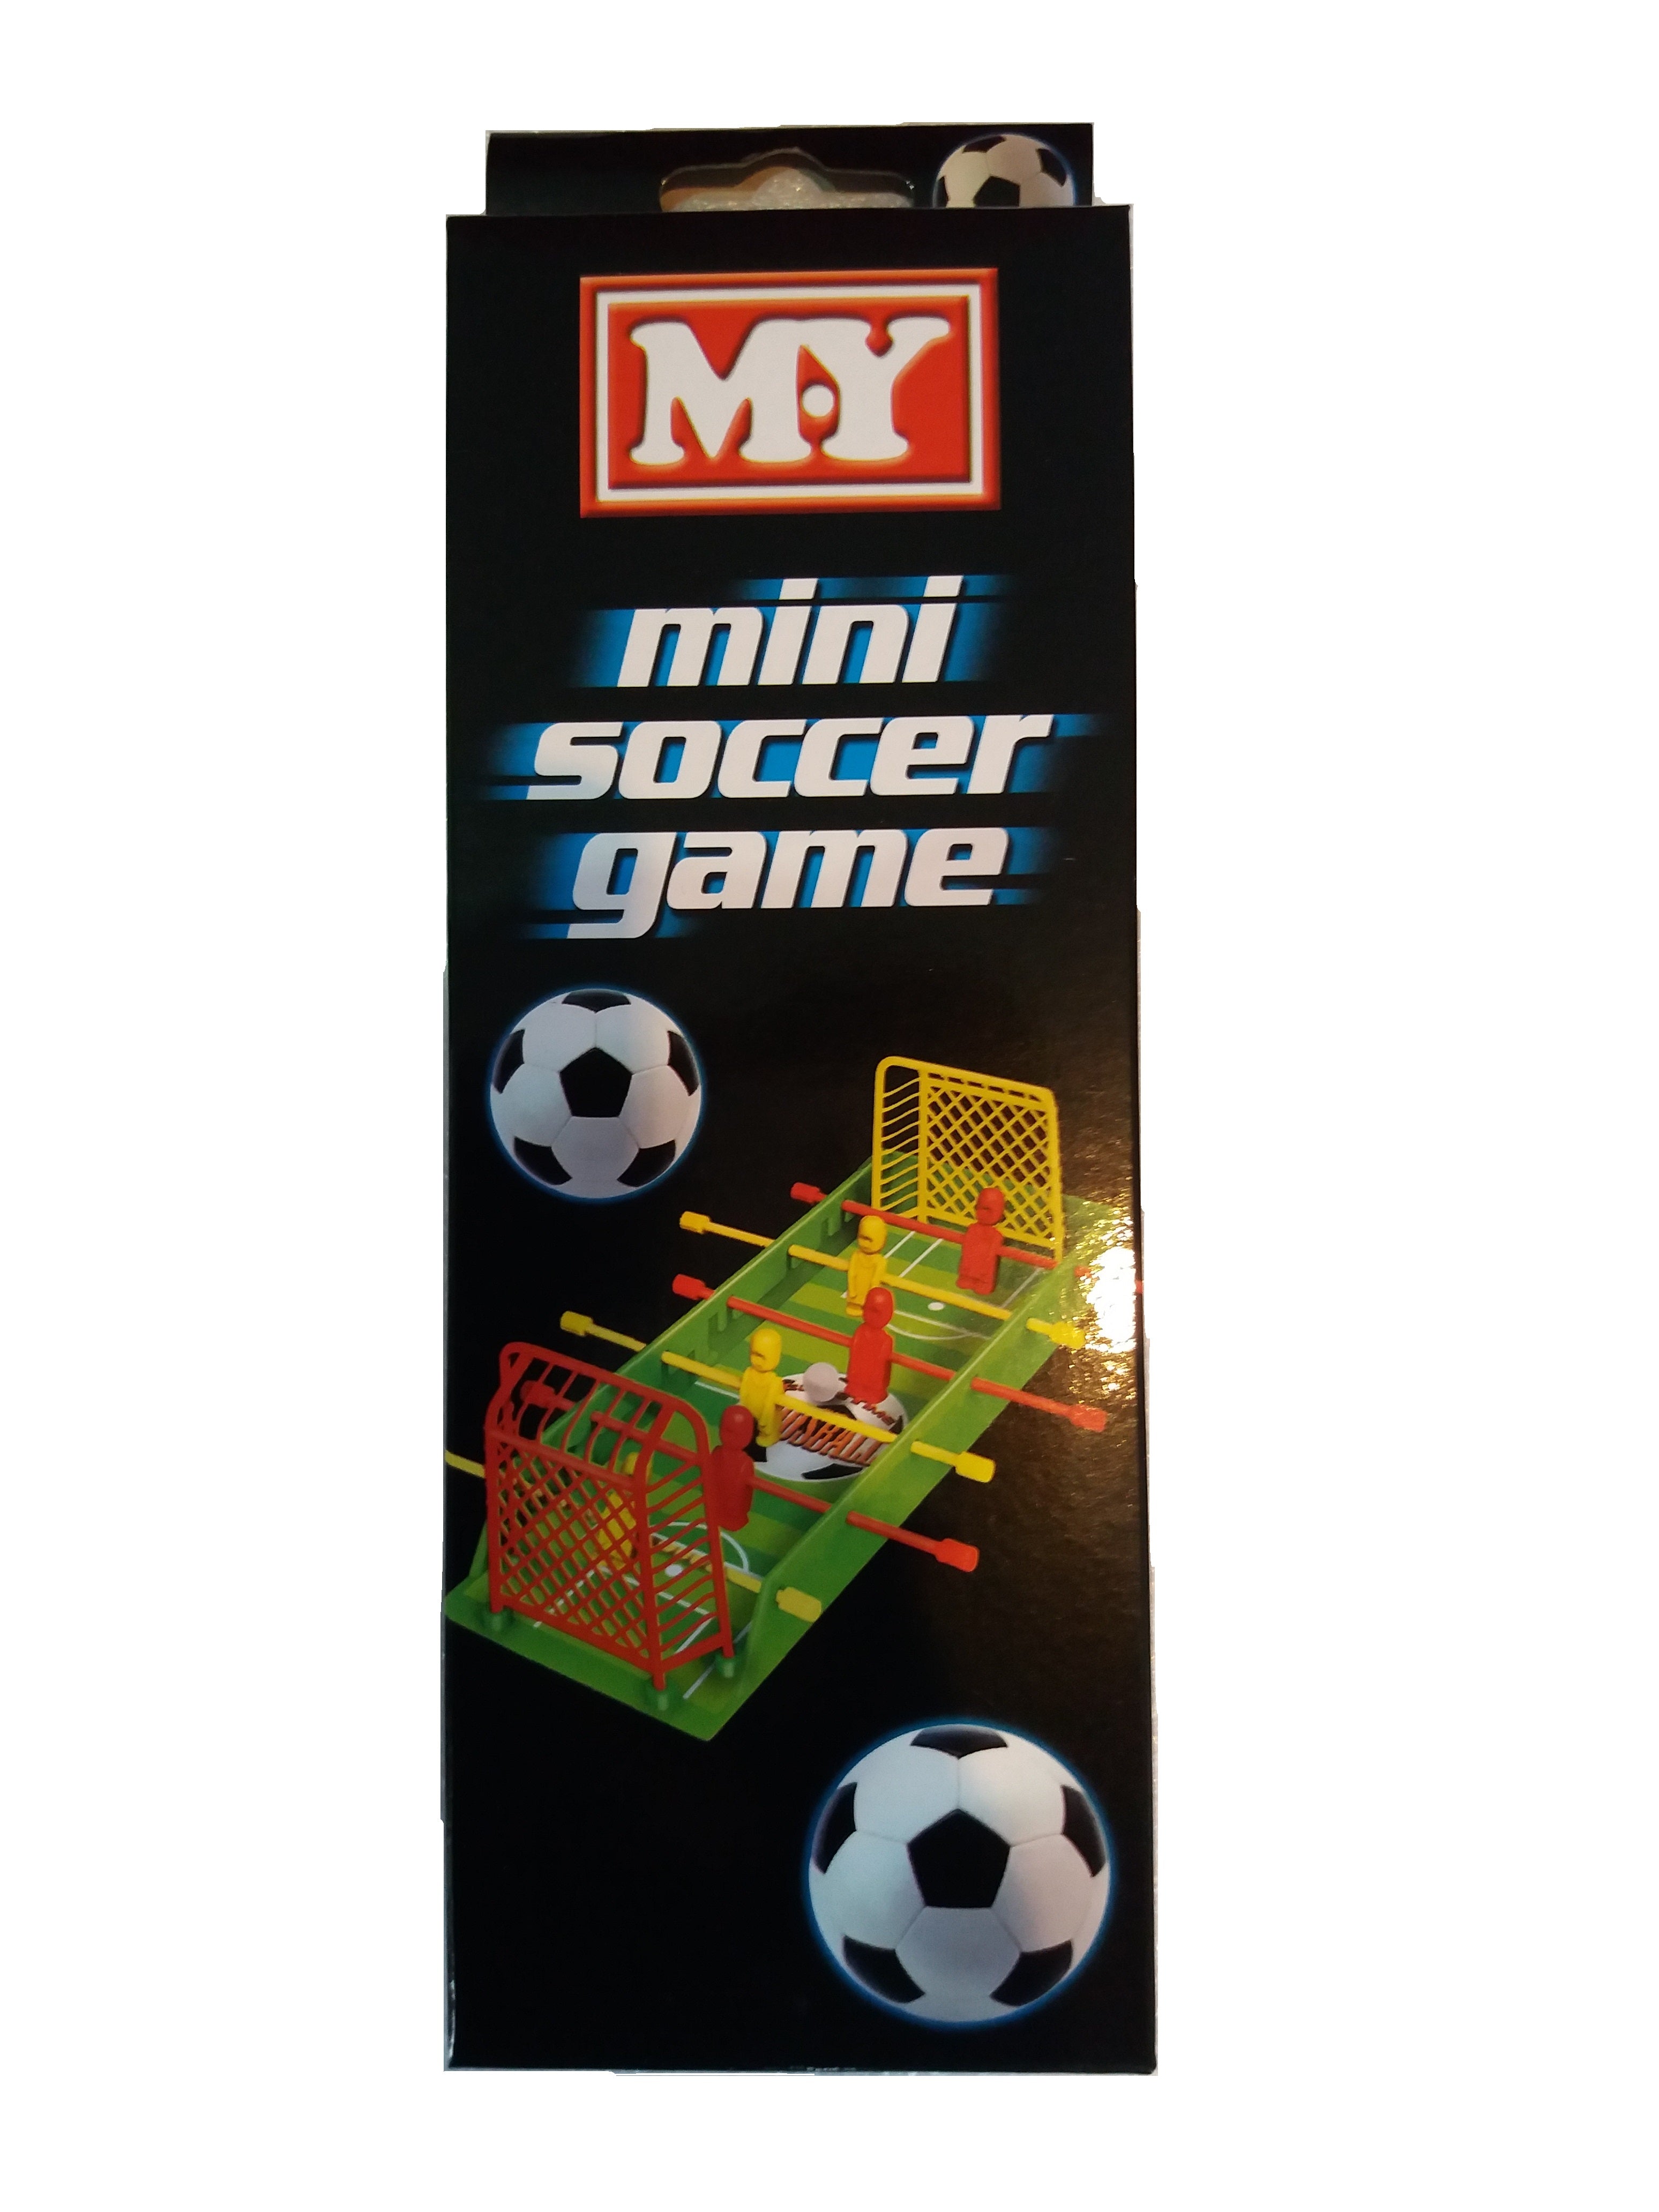 Mini Sports Game